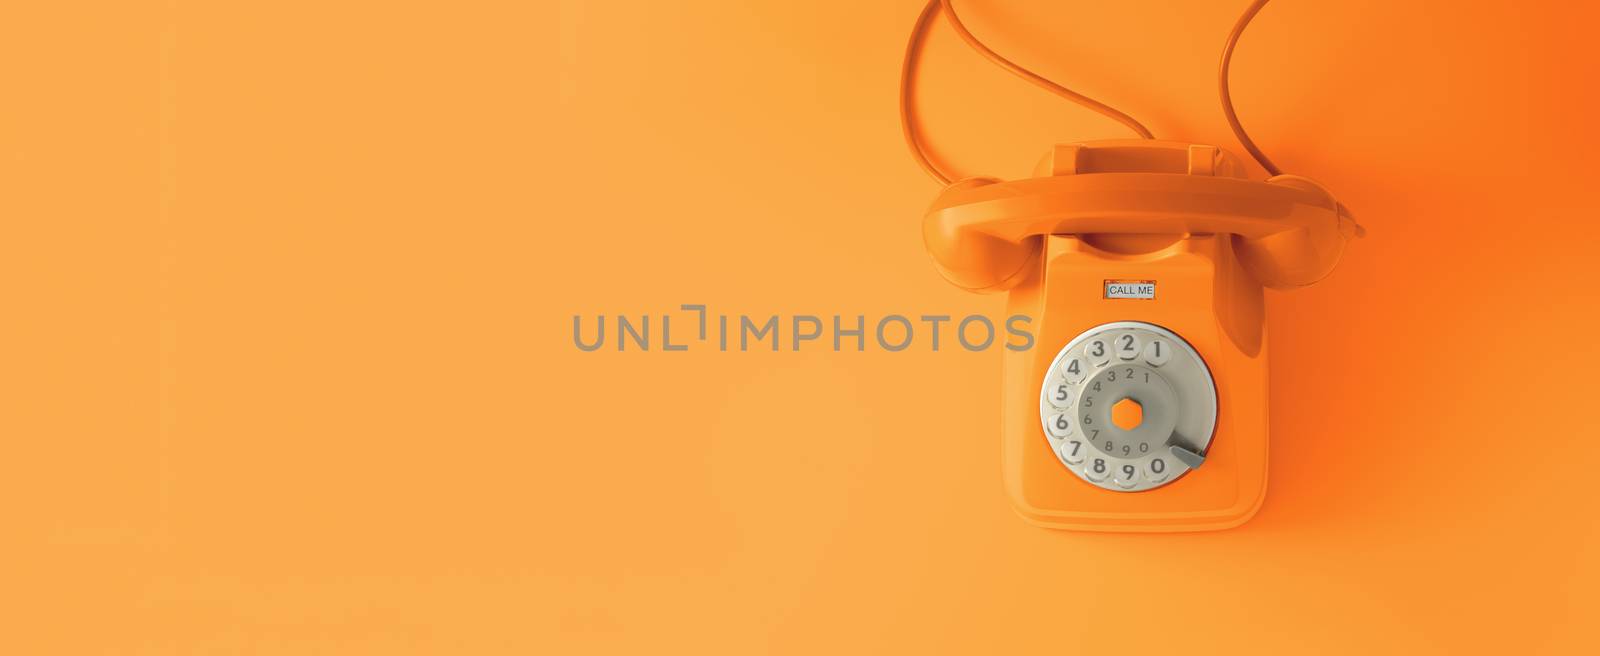 An orange vintage dial telephone. by maramade